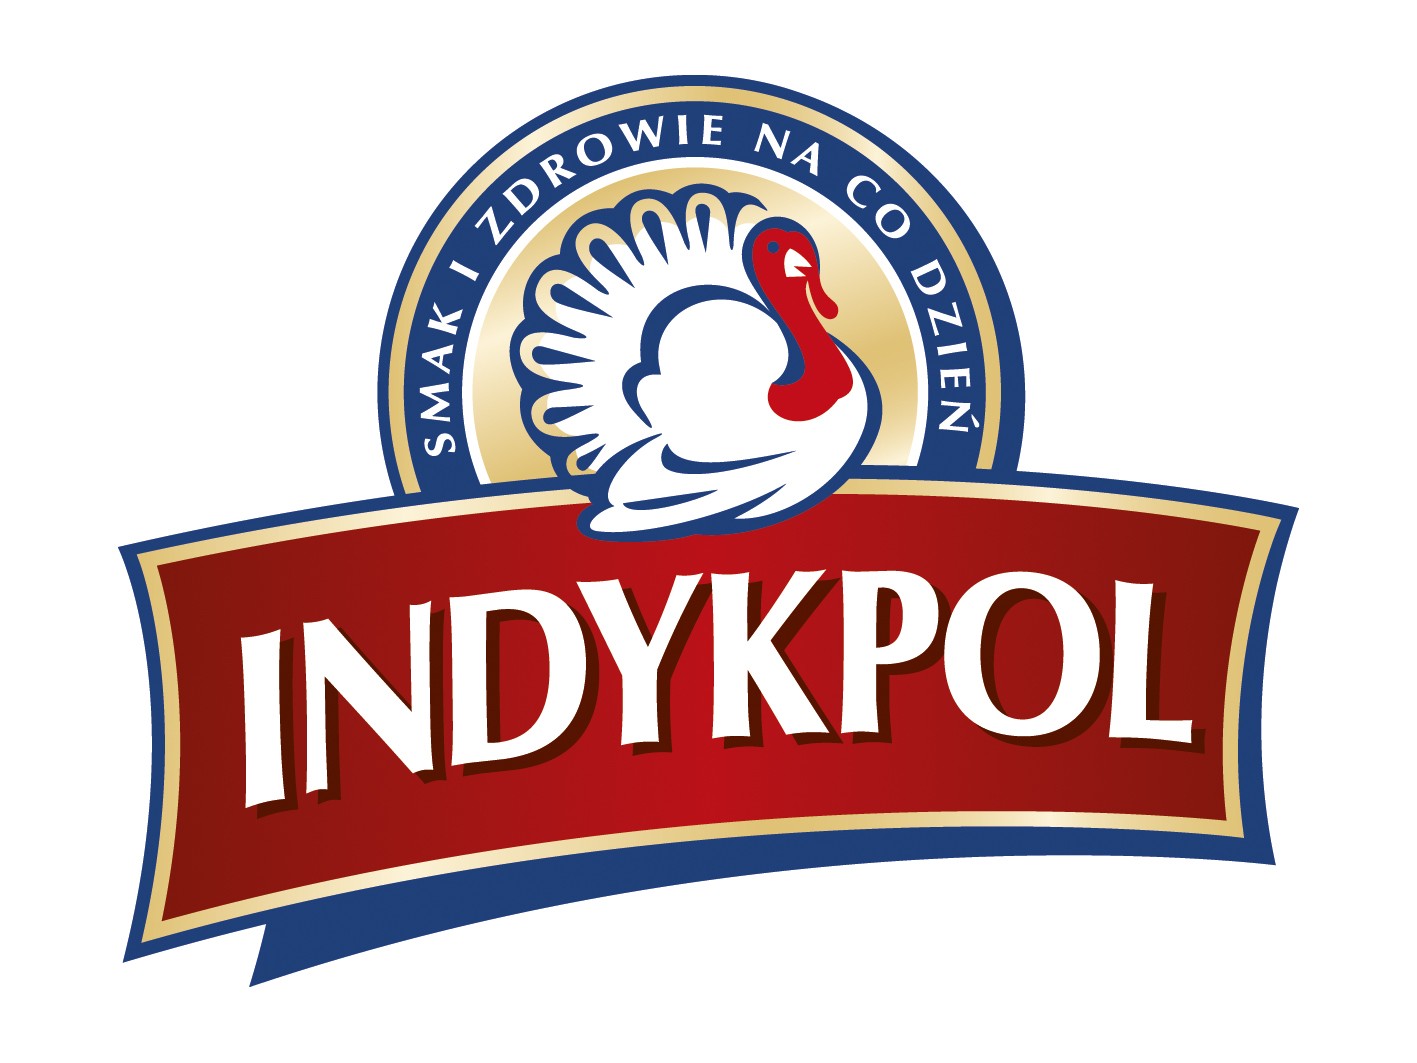 Indykpol Group